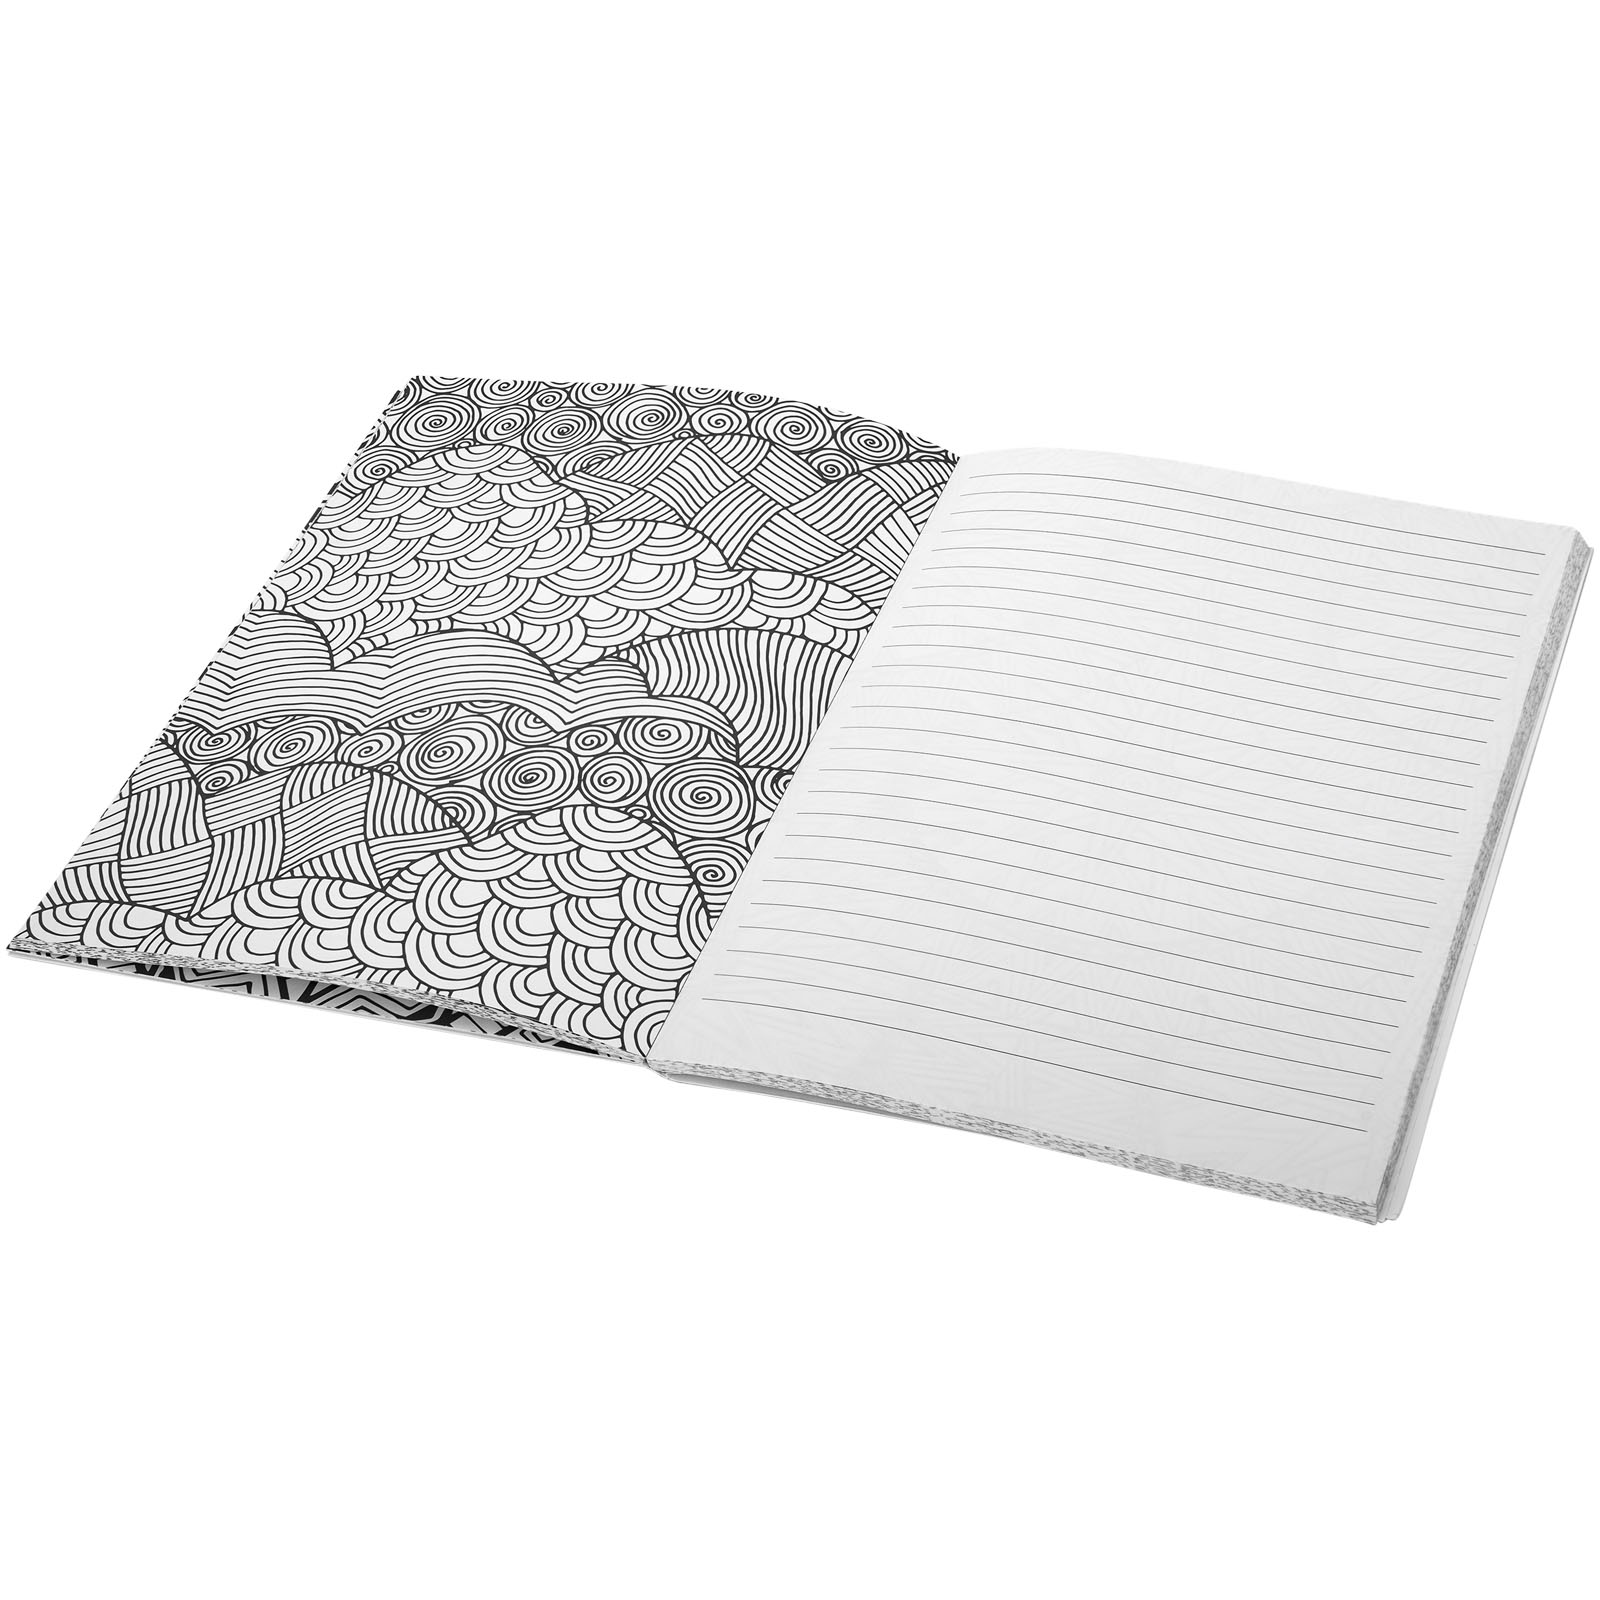 Notebooks & Desk Essentials - Doodle colouring notebook